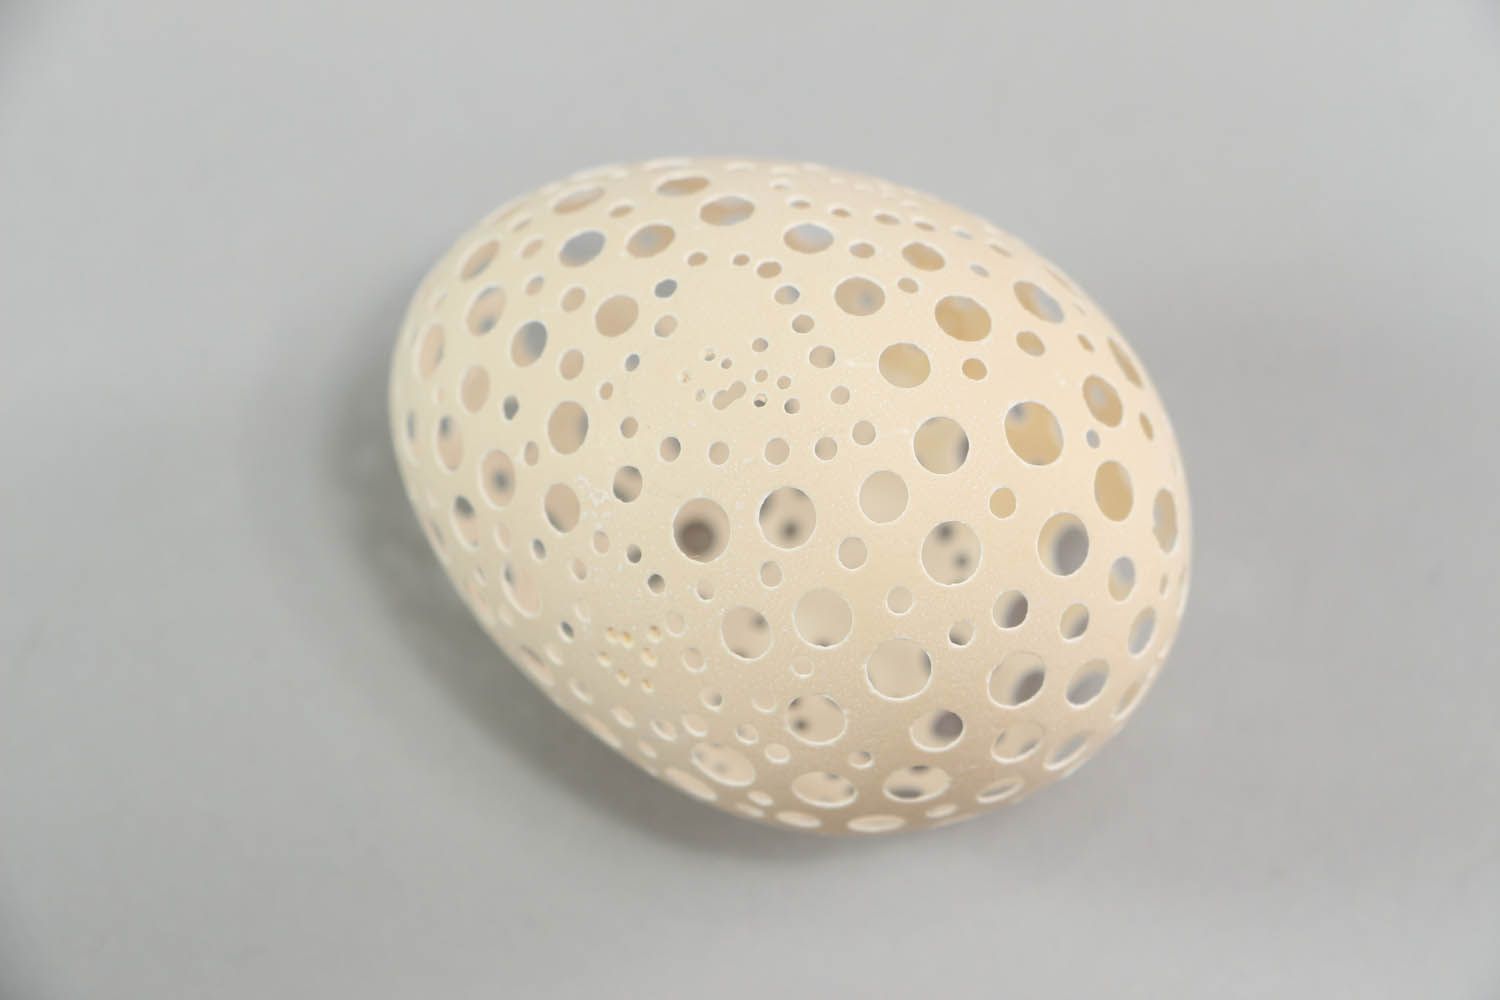 Carved egg photo 1